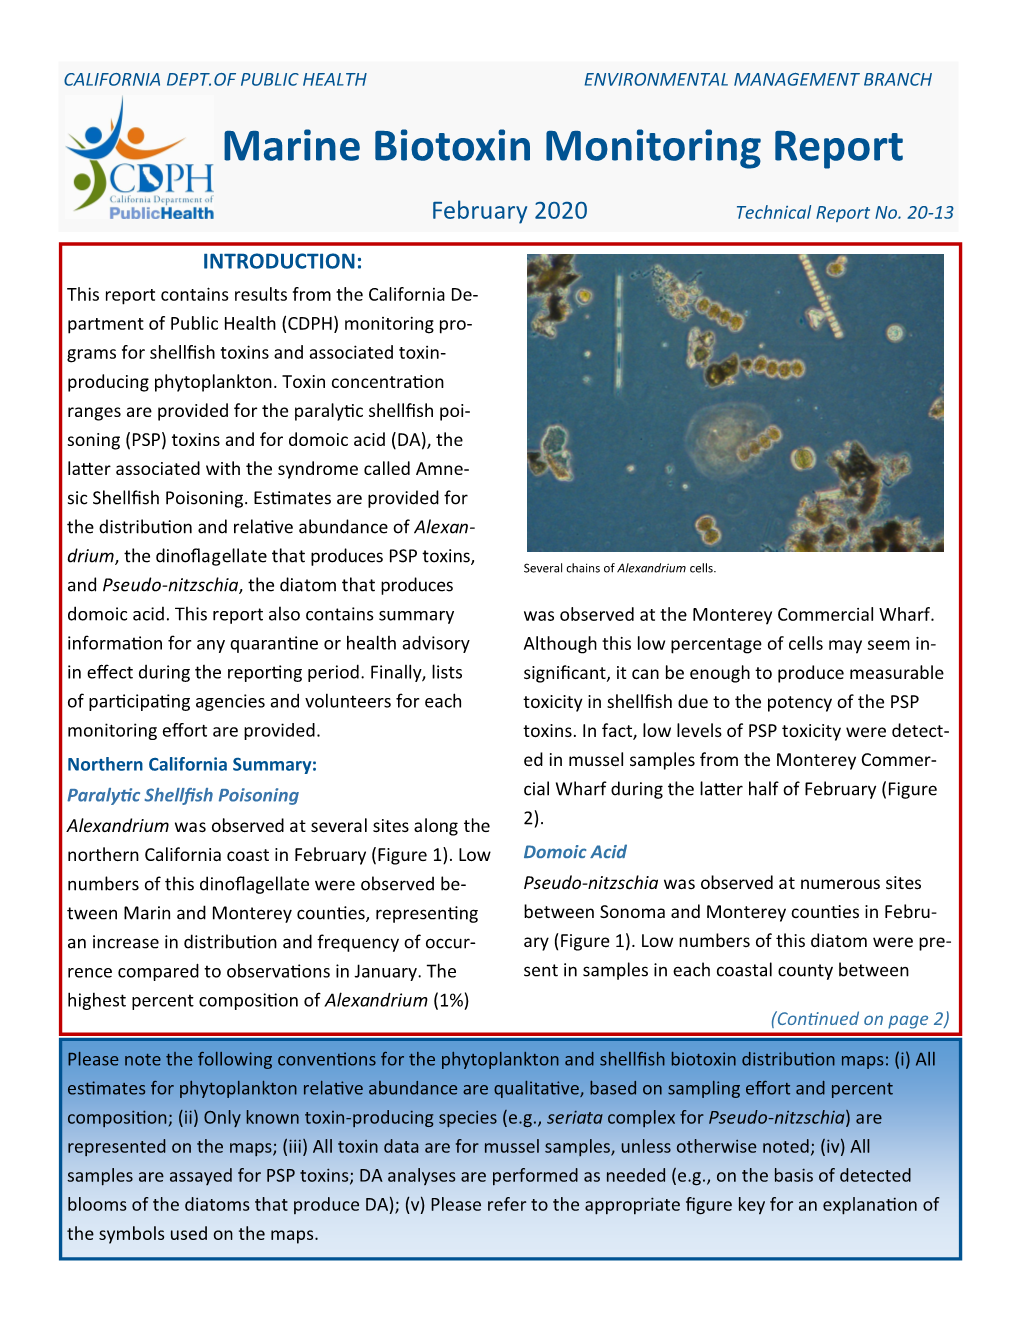 CDPH Marine Biotoxin Monthly Report, February 2020